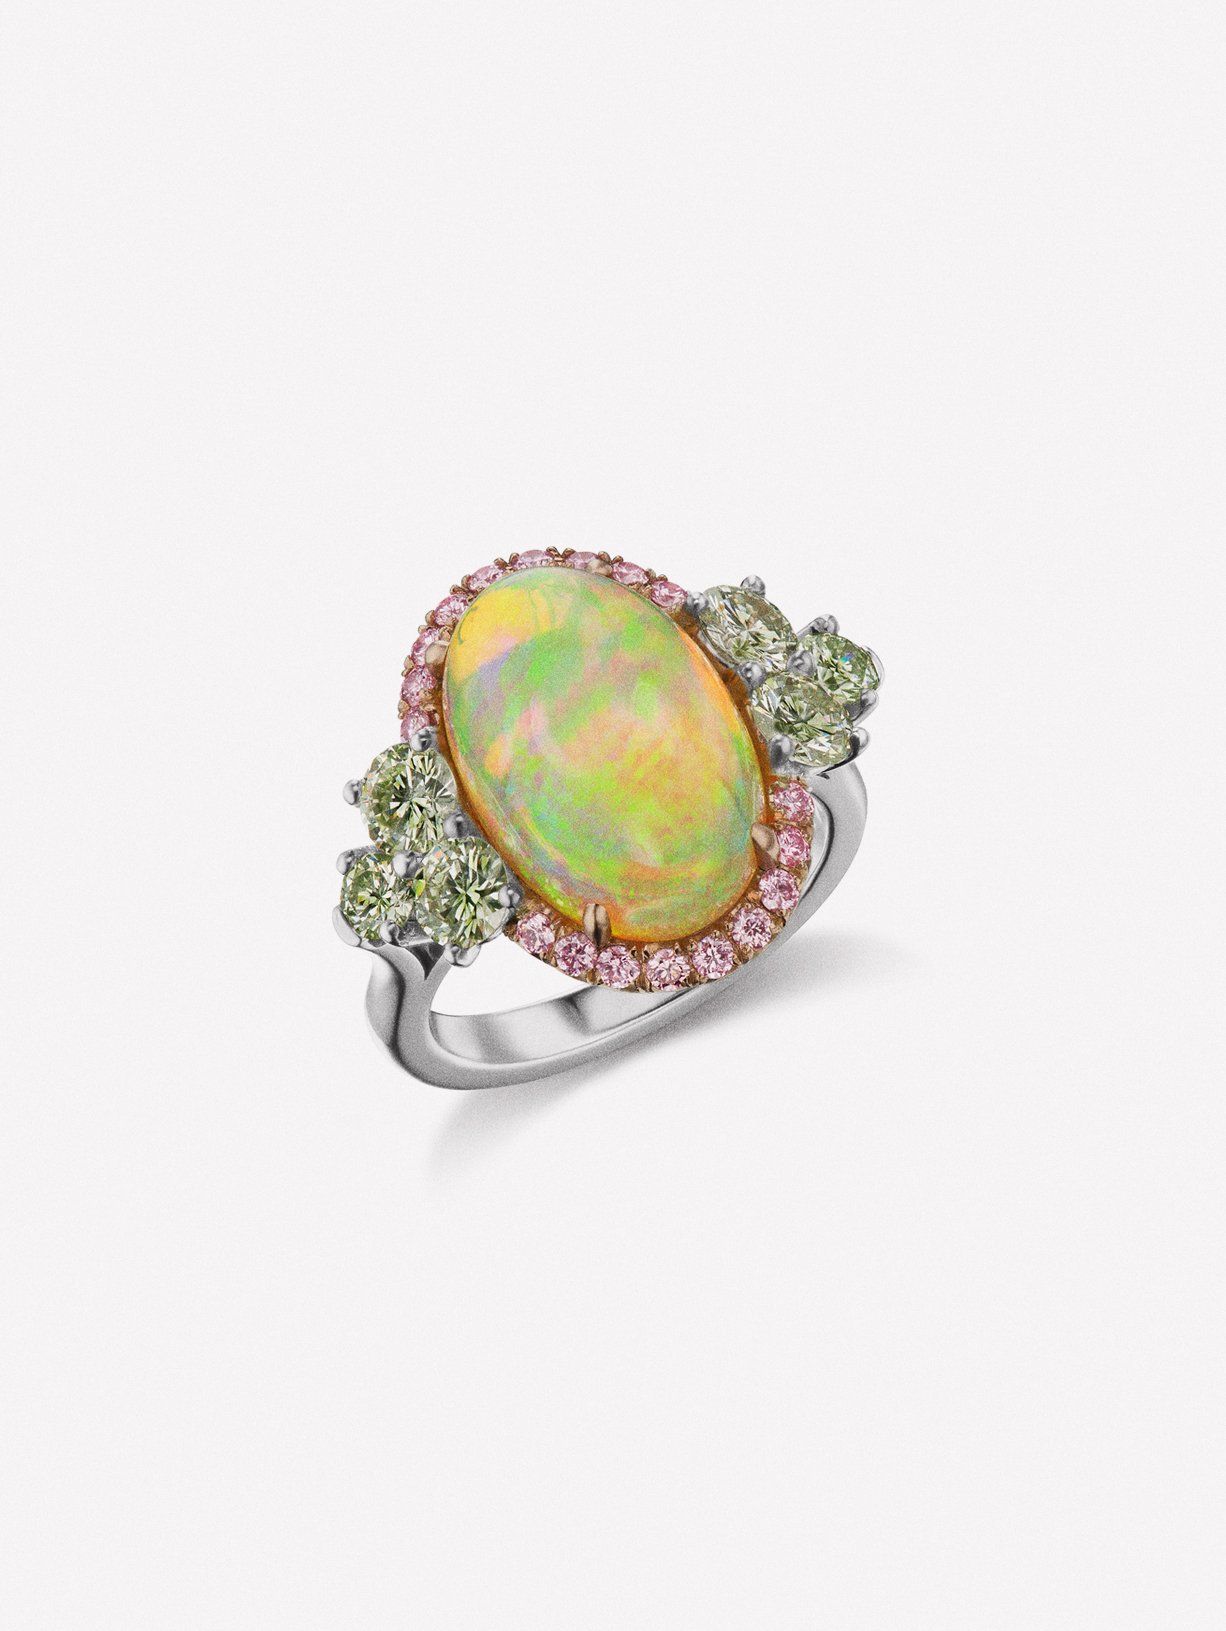 hbz opal engagement rings j fine cabochon opal ring 1296x